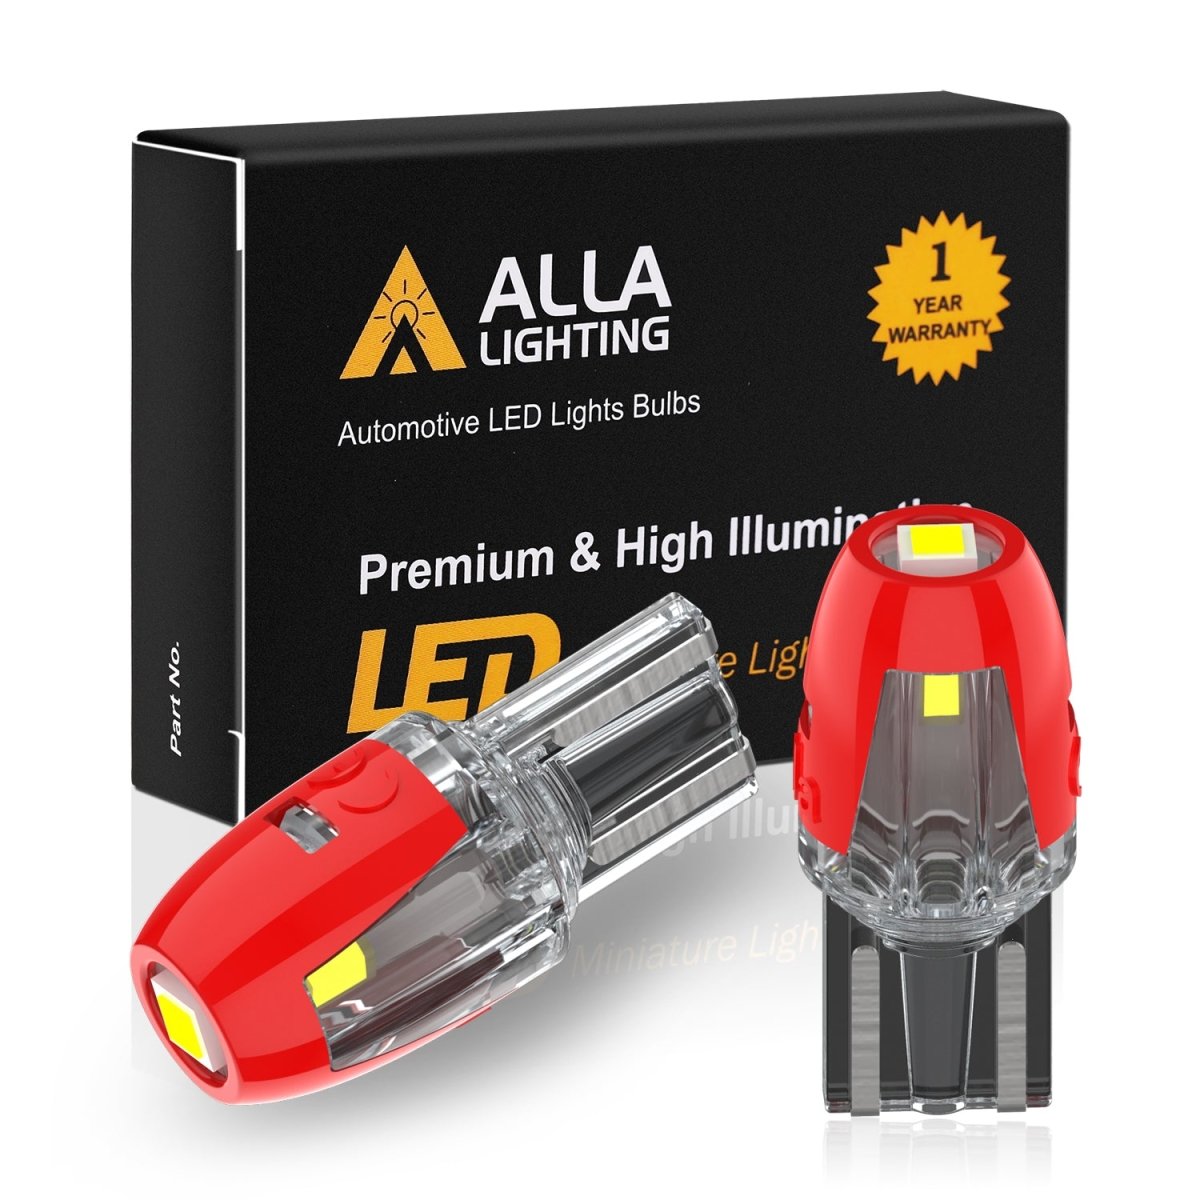 Super Bright Interior LED Lights For Your Car | Alla Lighting